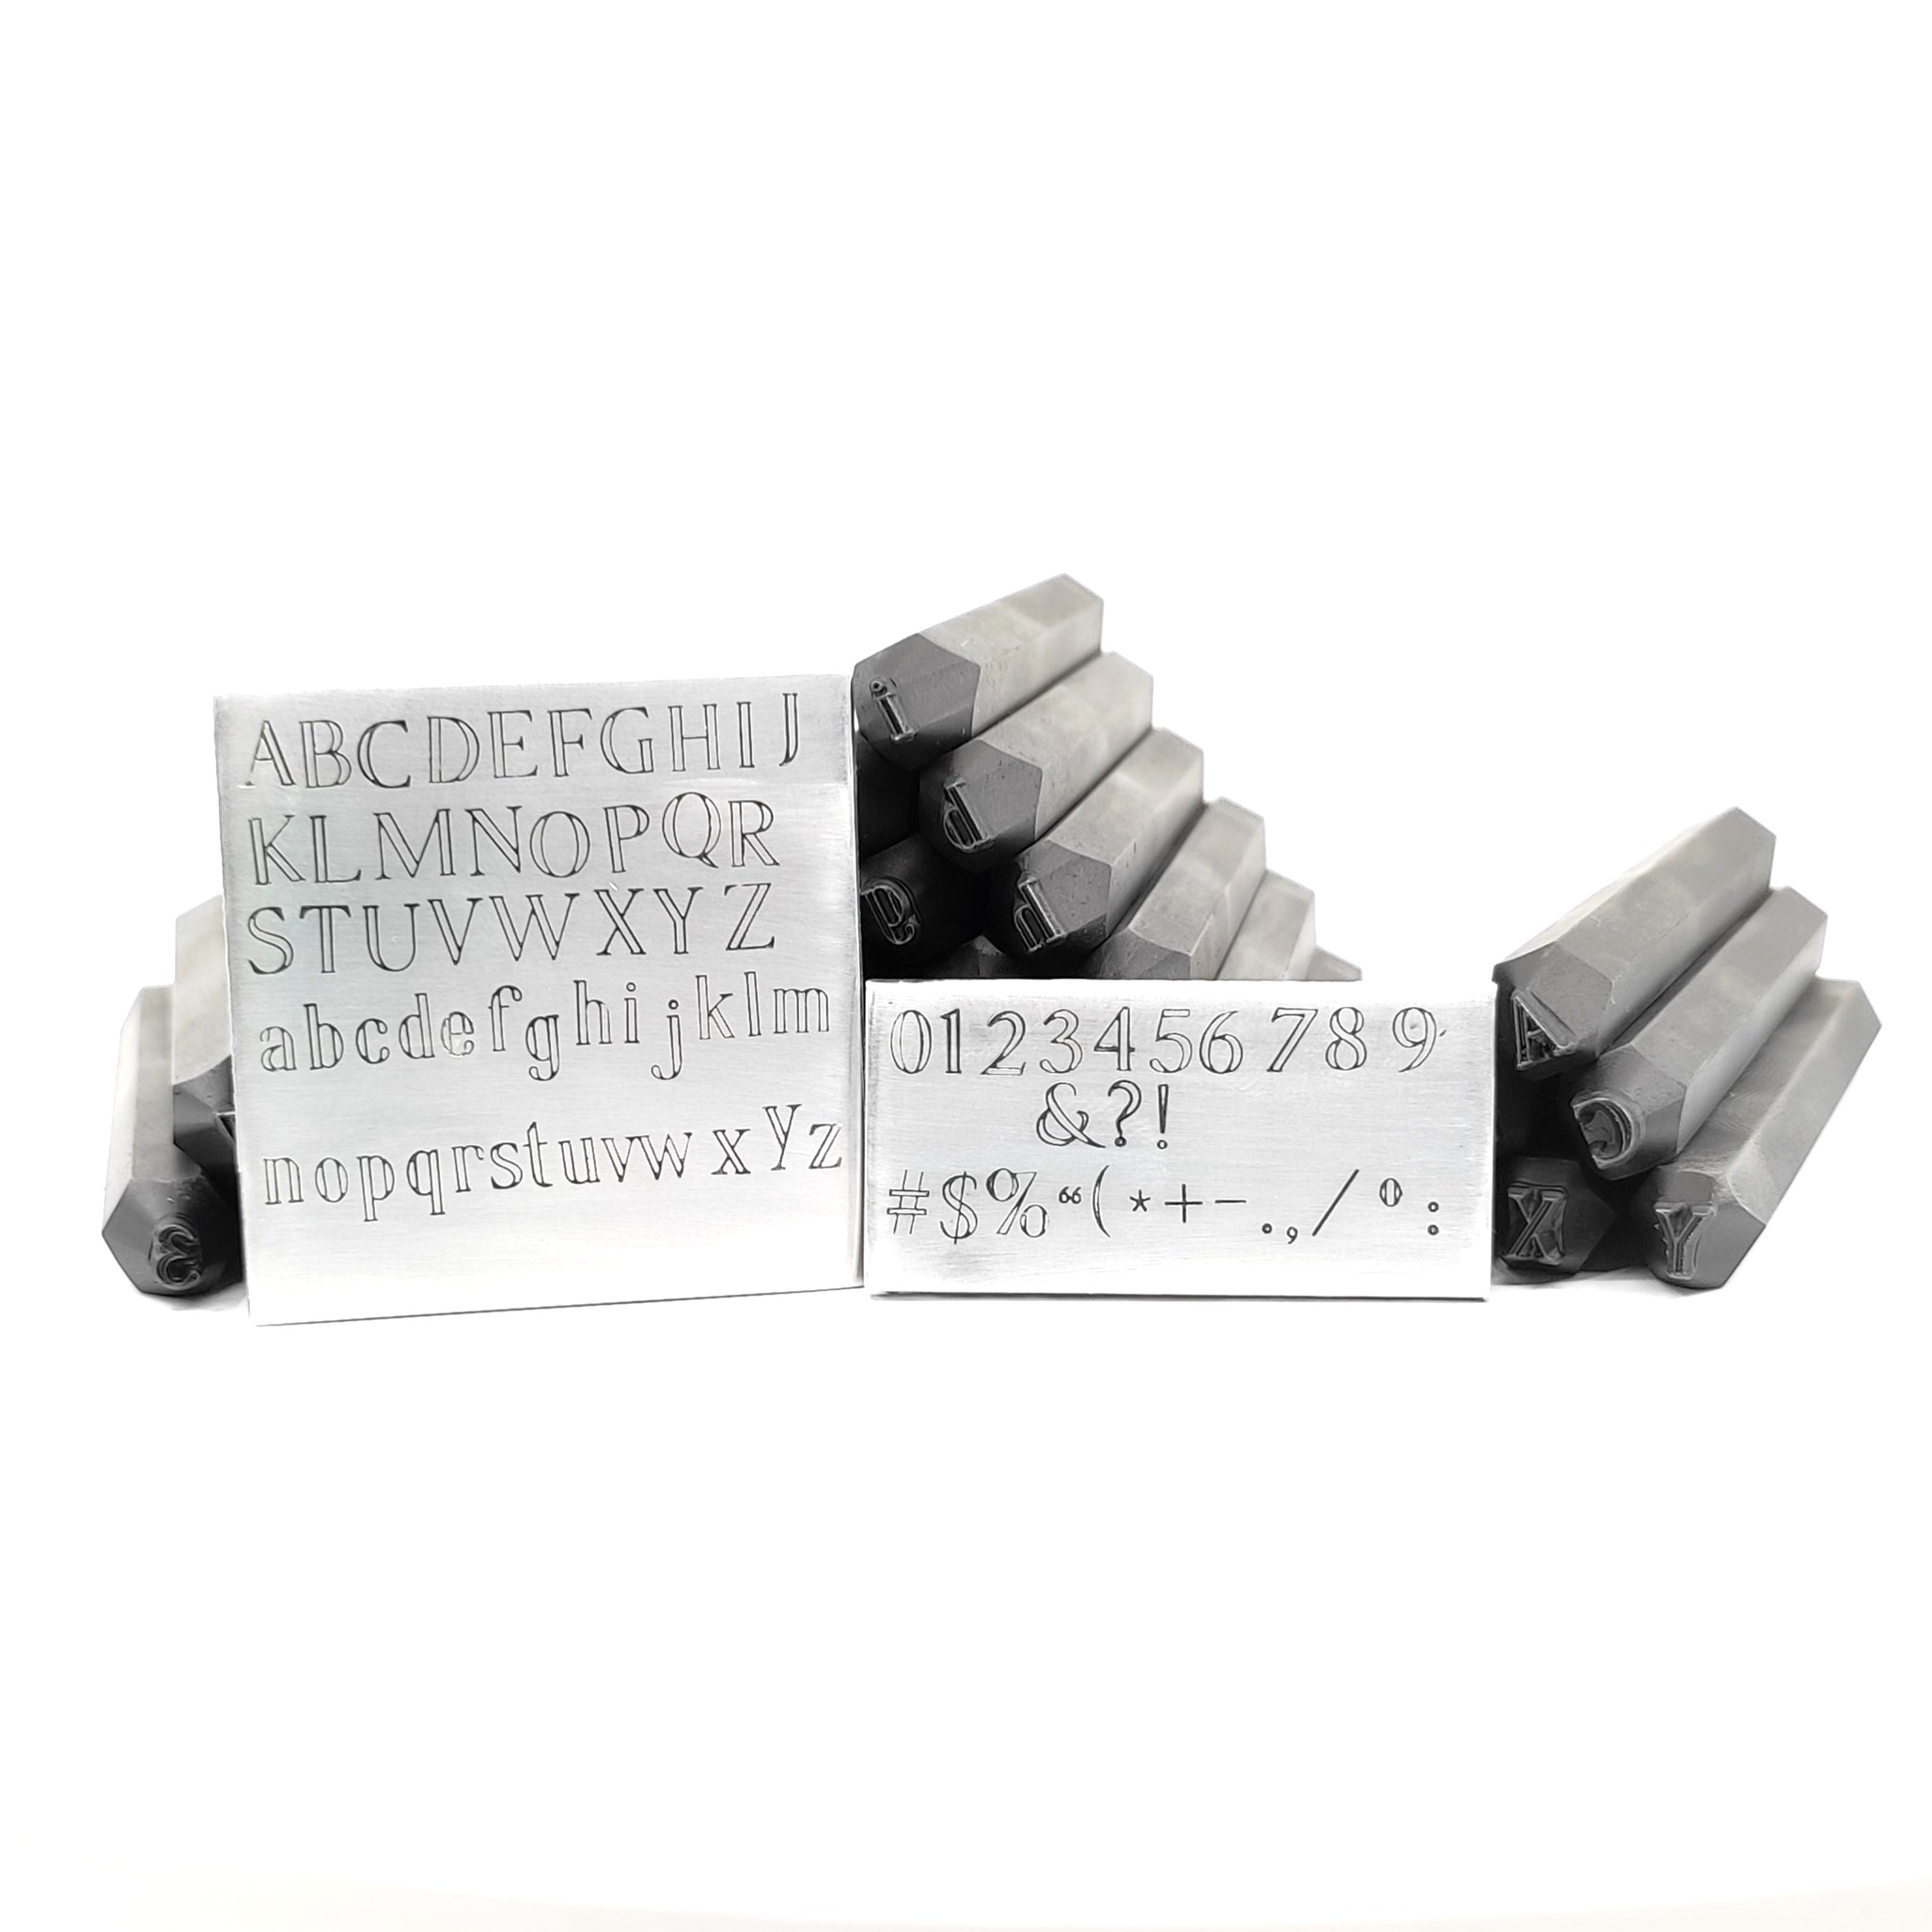 1/2 Large Metal Letter and Number Punch Stamp Set